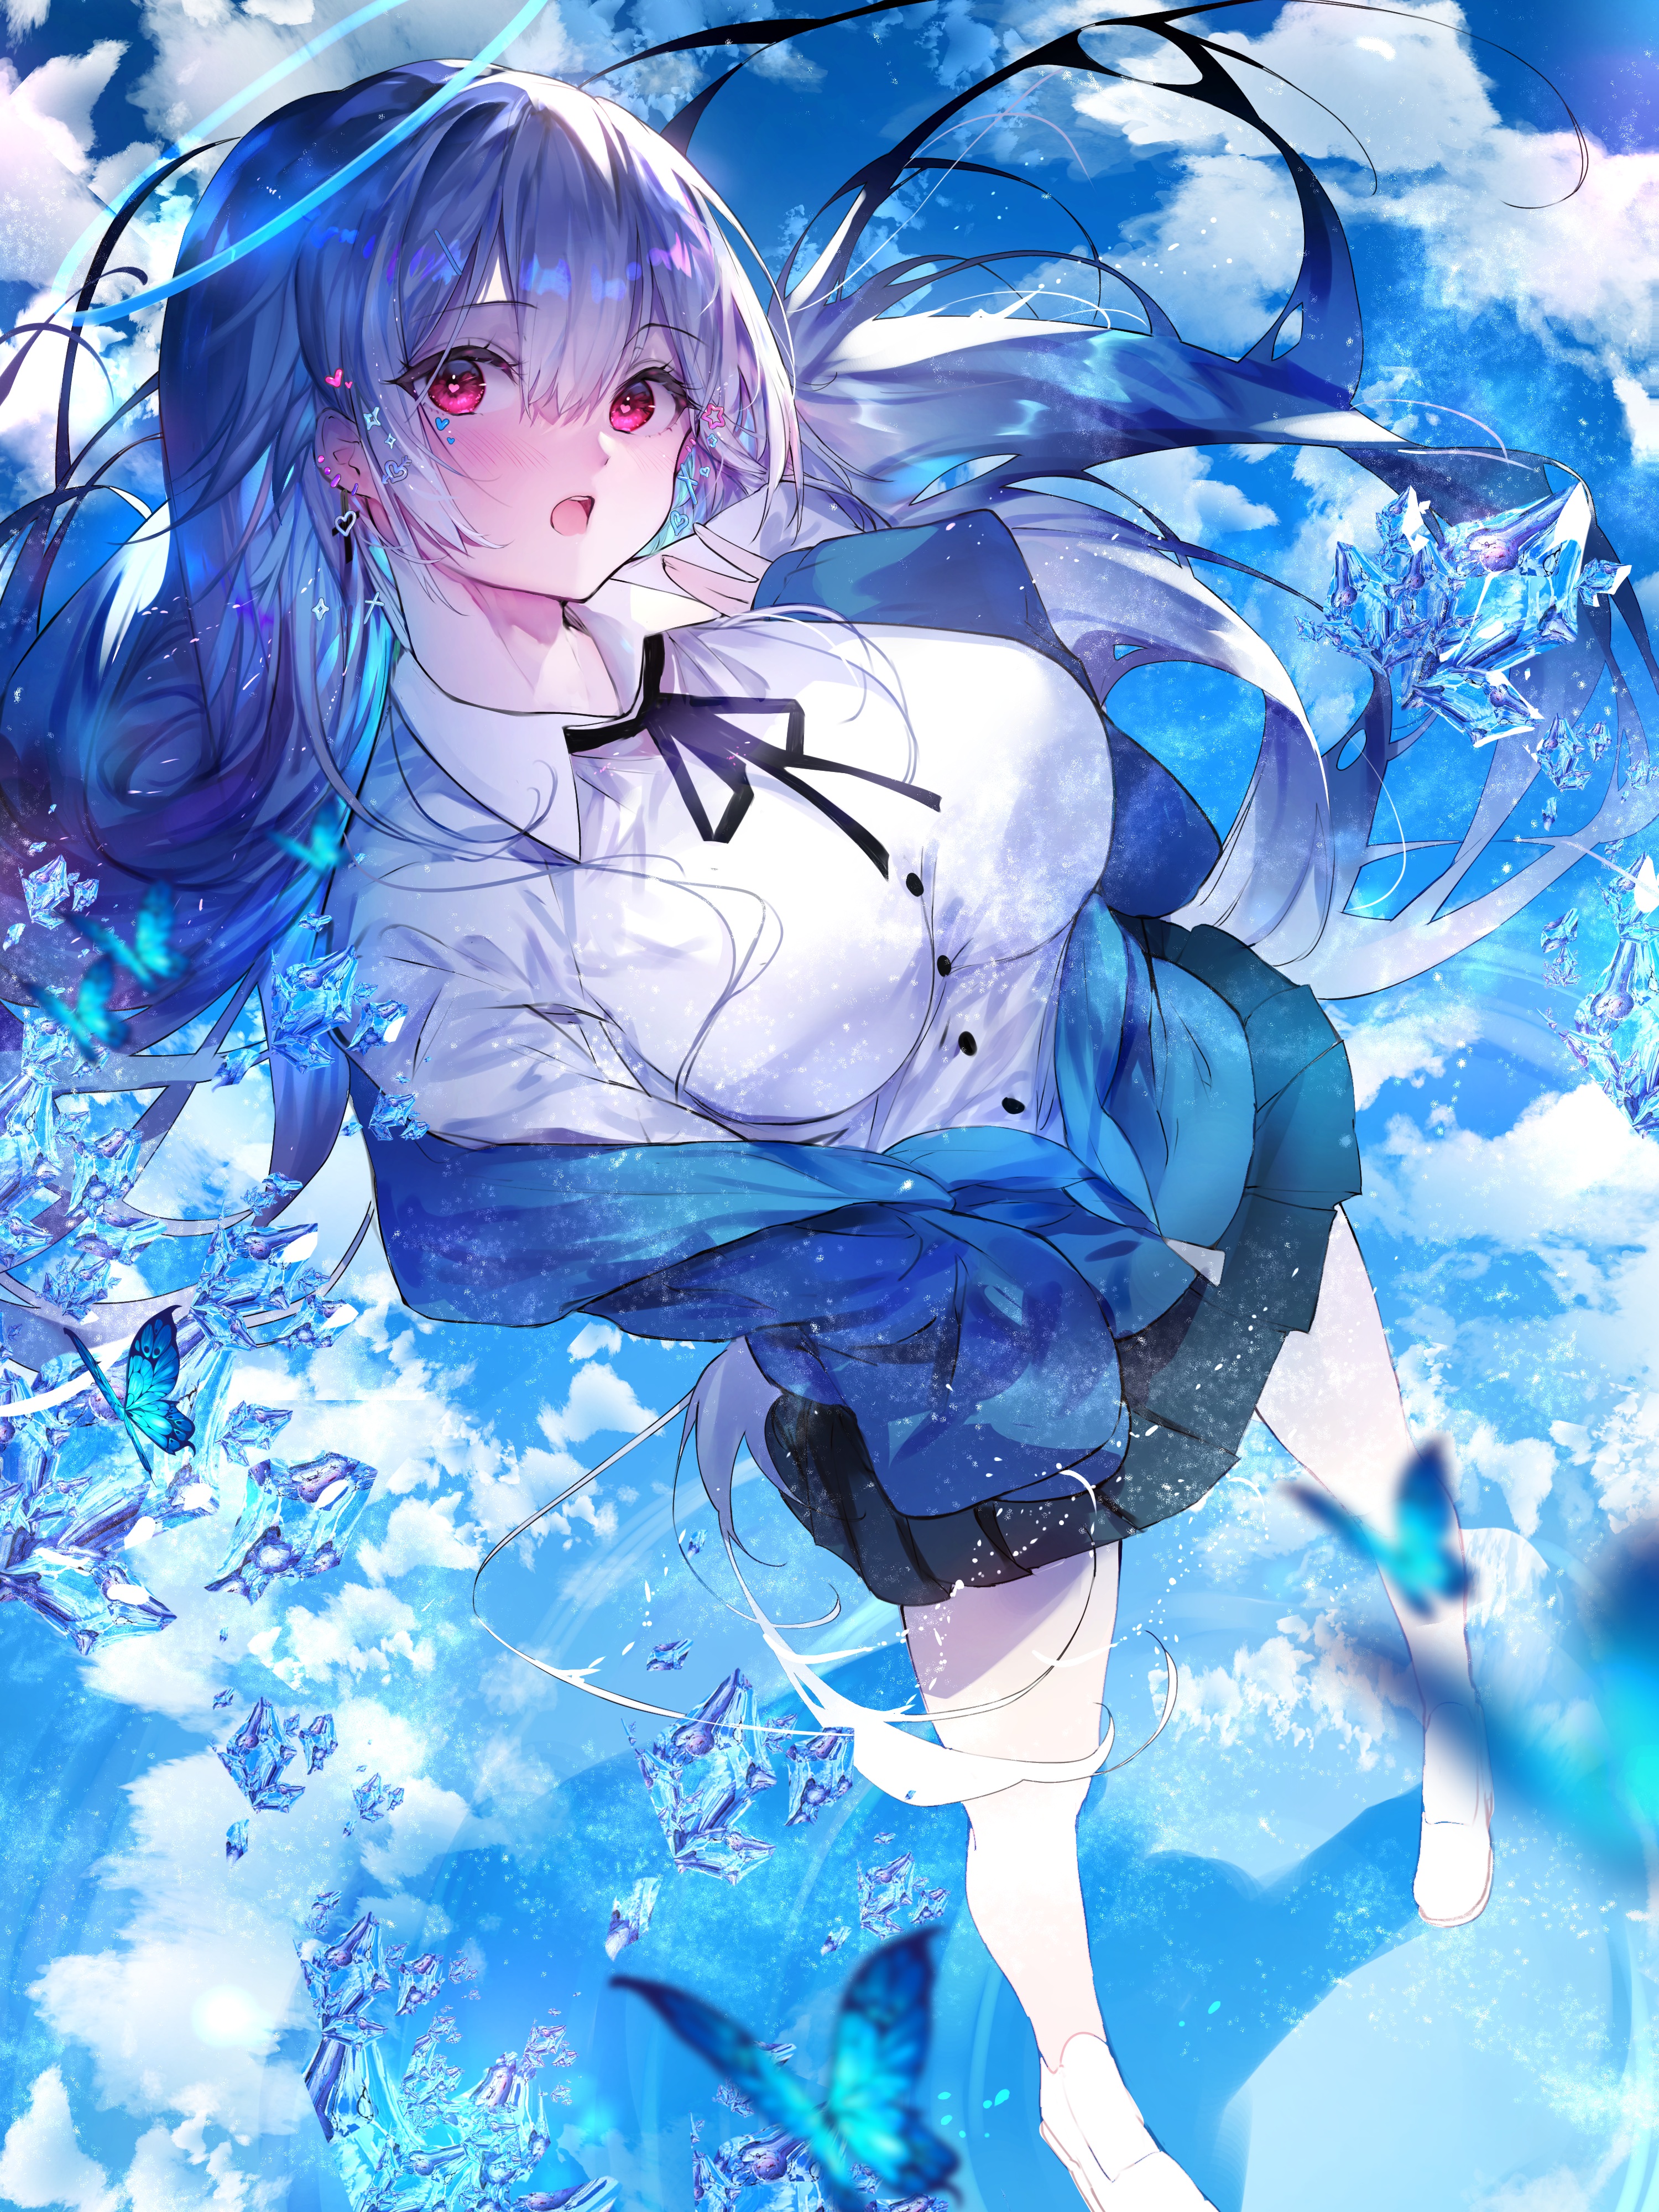 Anime 3000x4000 anime anime girls portrait display schoolgirl school uniform blue hair butterfly crystal  clouds sky red eyes heart eyes W (artist) halo blushing Pixiv